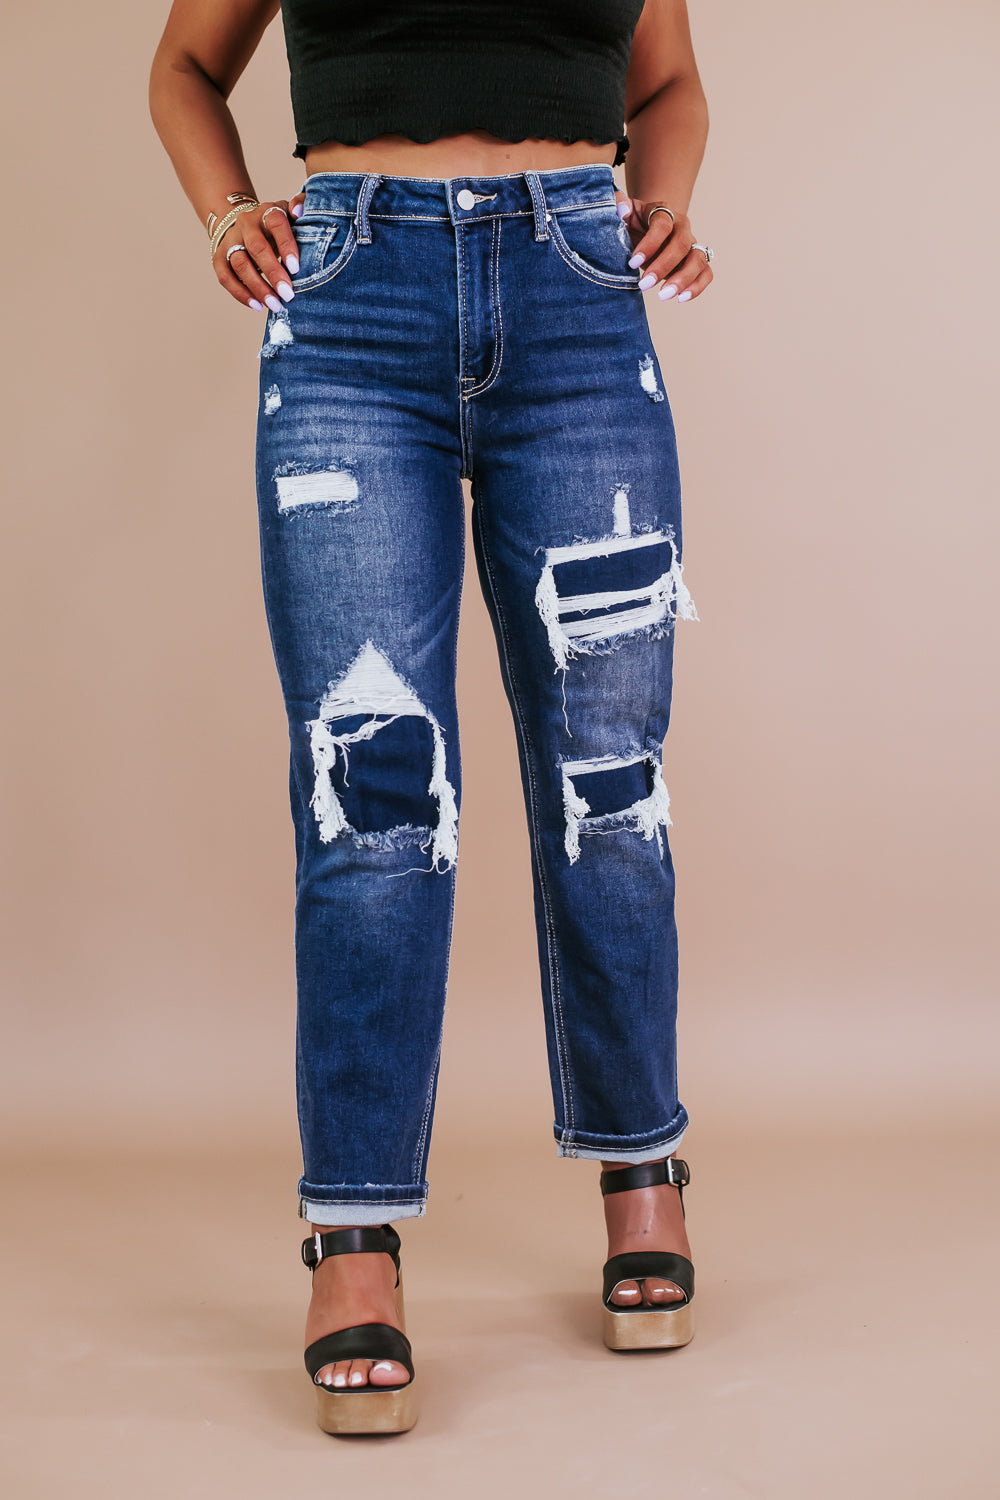 rdp5072,rdp5072X, Risen denim, patched denim ,distressed patched denim, straight leg jeans, summer denim inspo